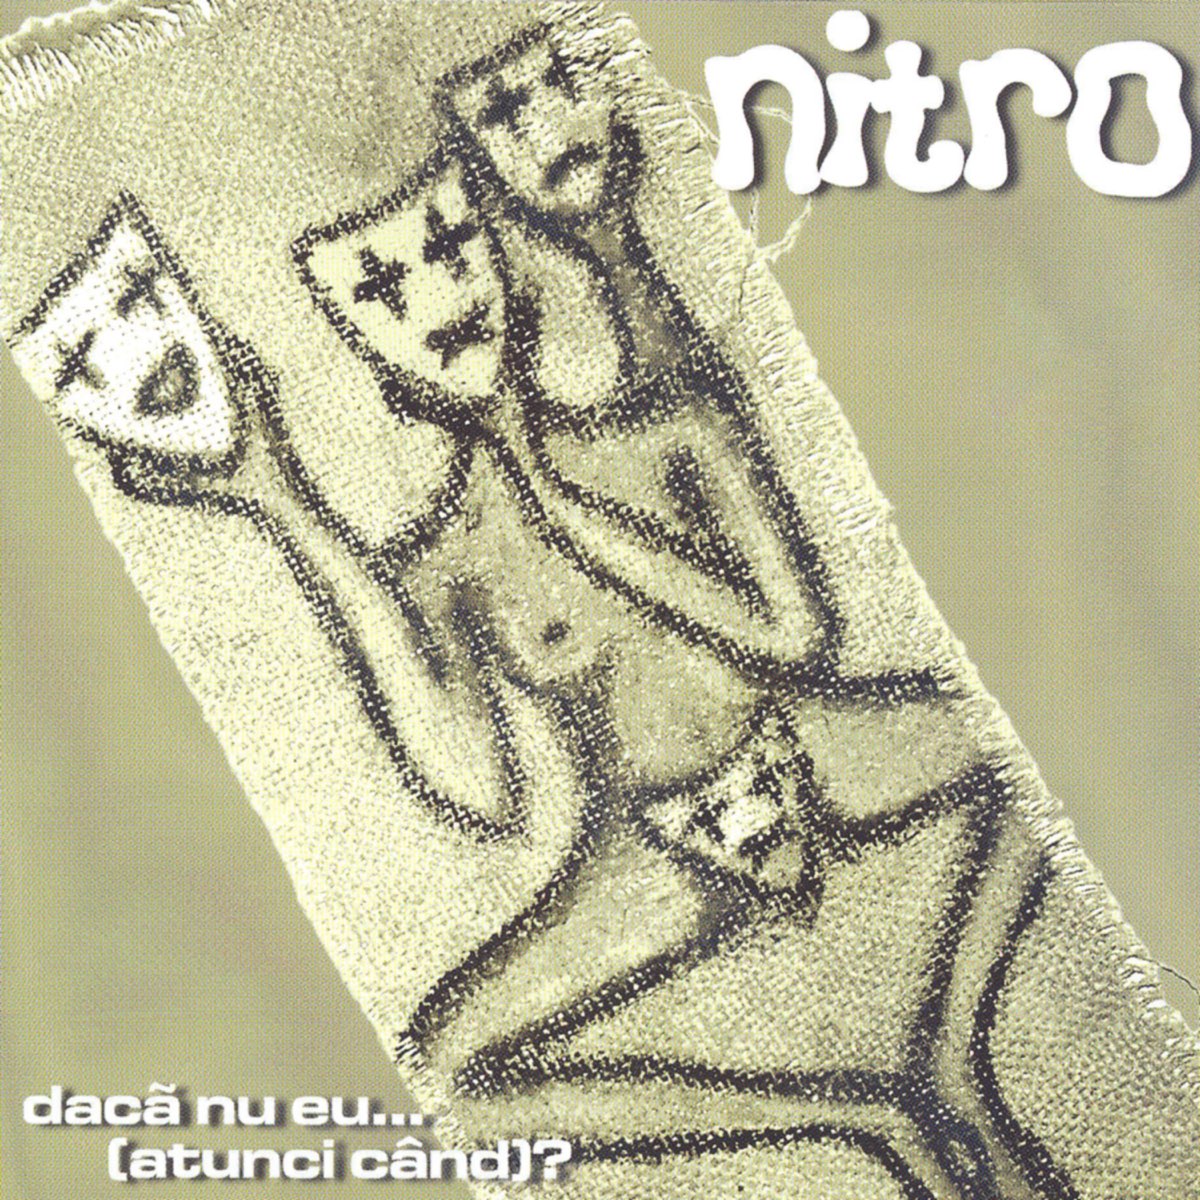 Apple Music 上Nitro的专辑《Daca nu eu….(atunci cand)?》